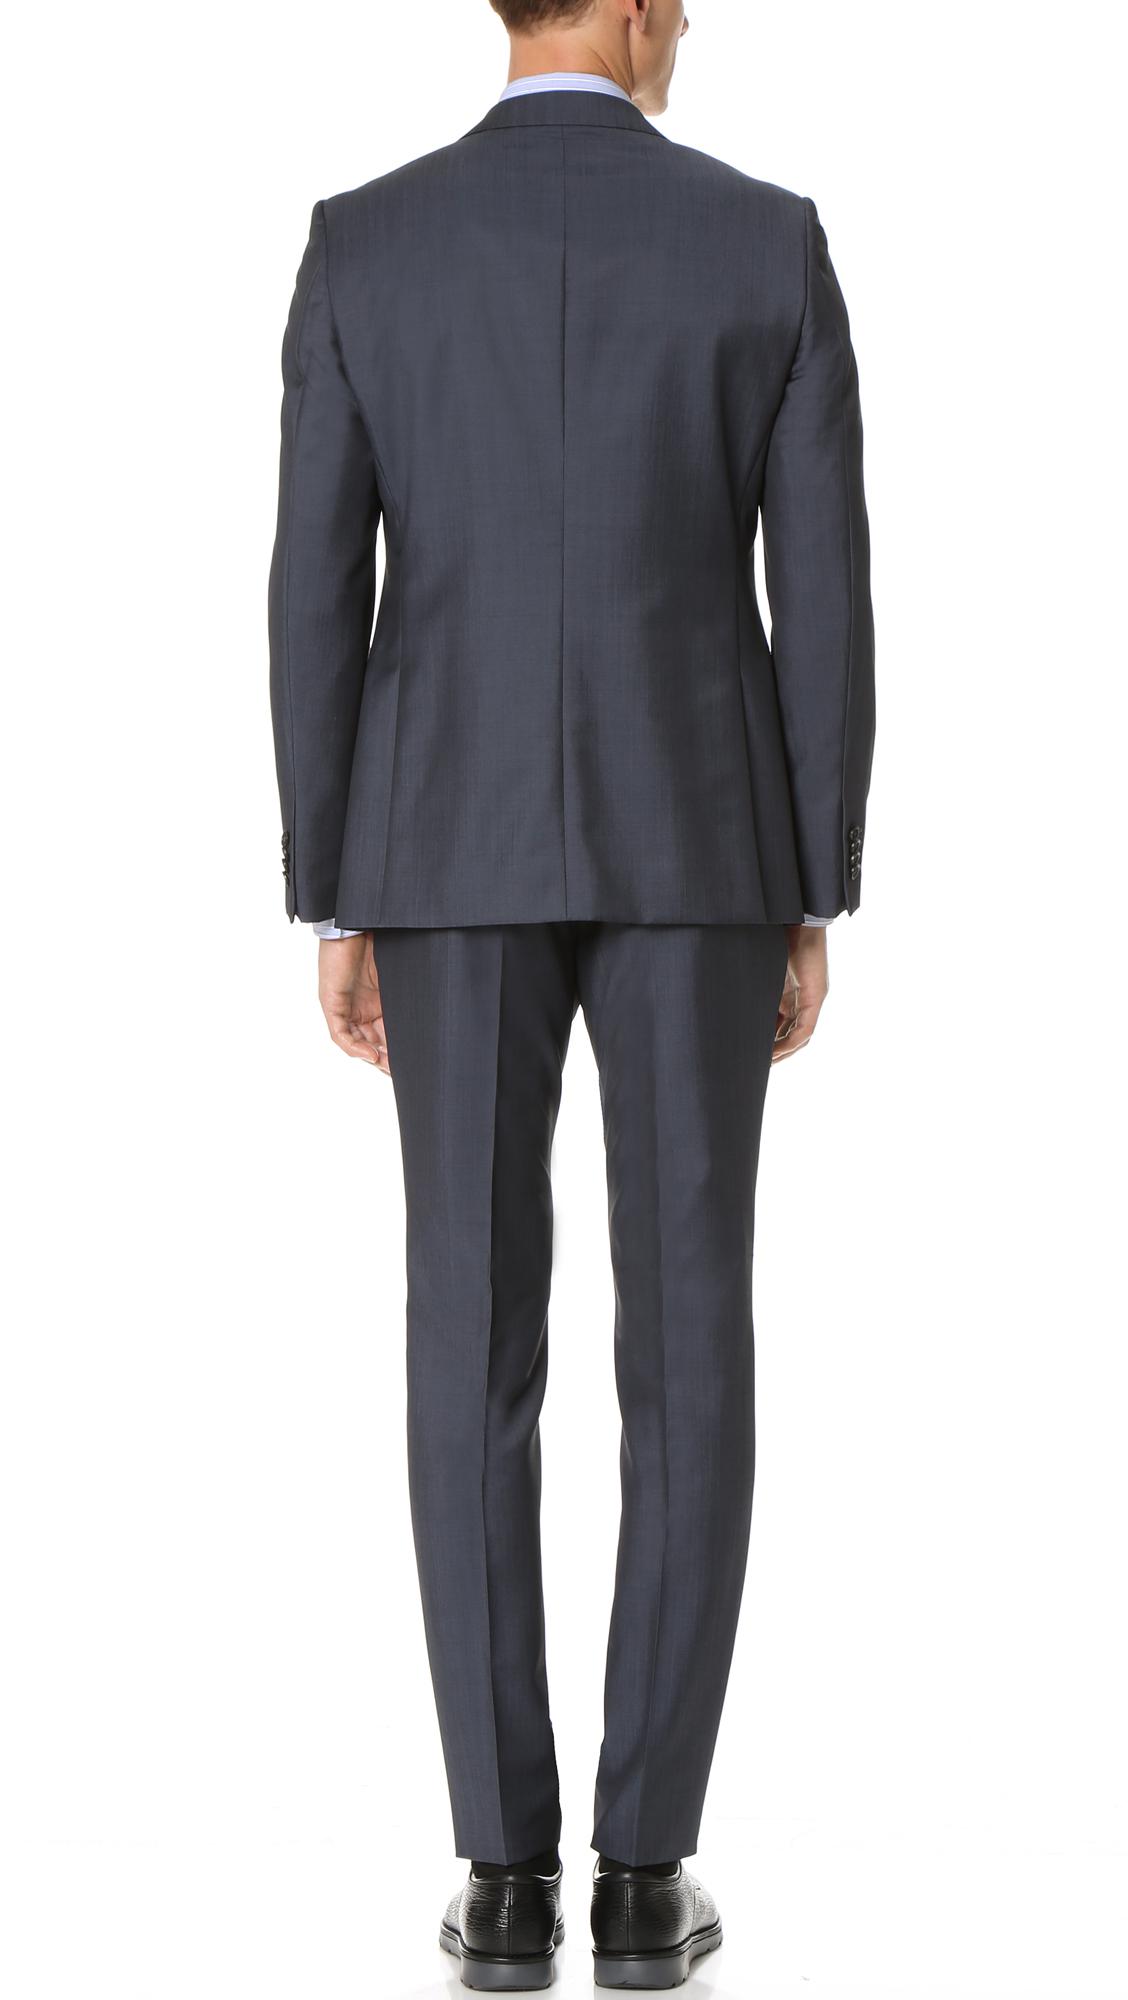 Z Zegna Drop 8 Wool Mohair Blend Suit in Blue for Men - Lyst